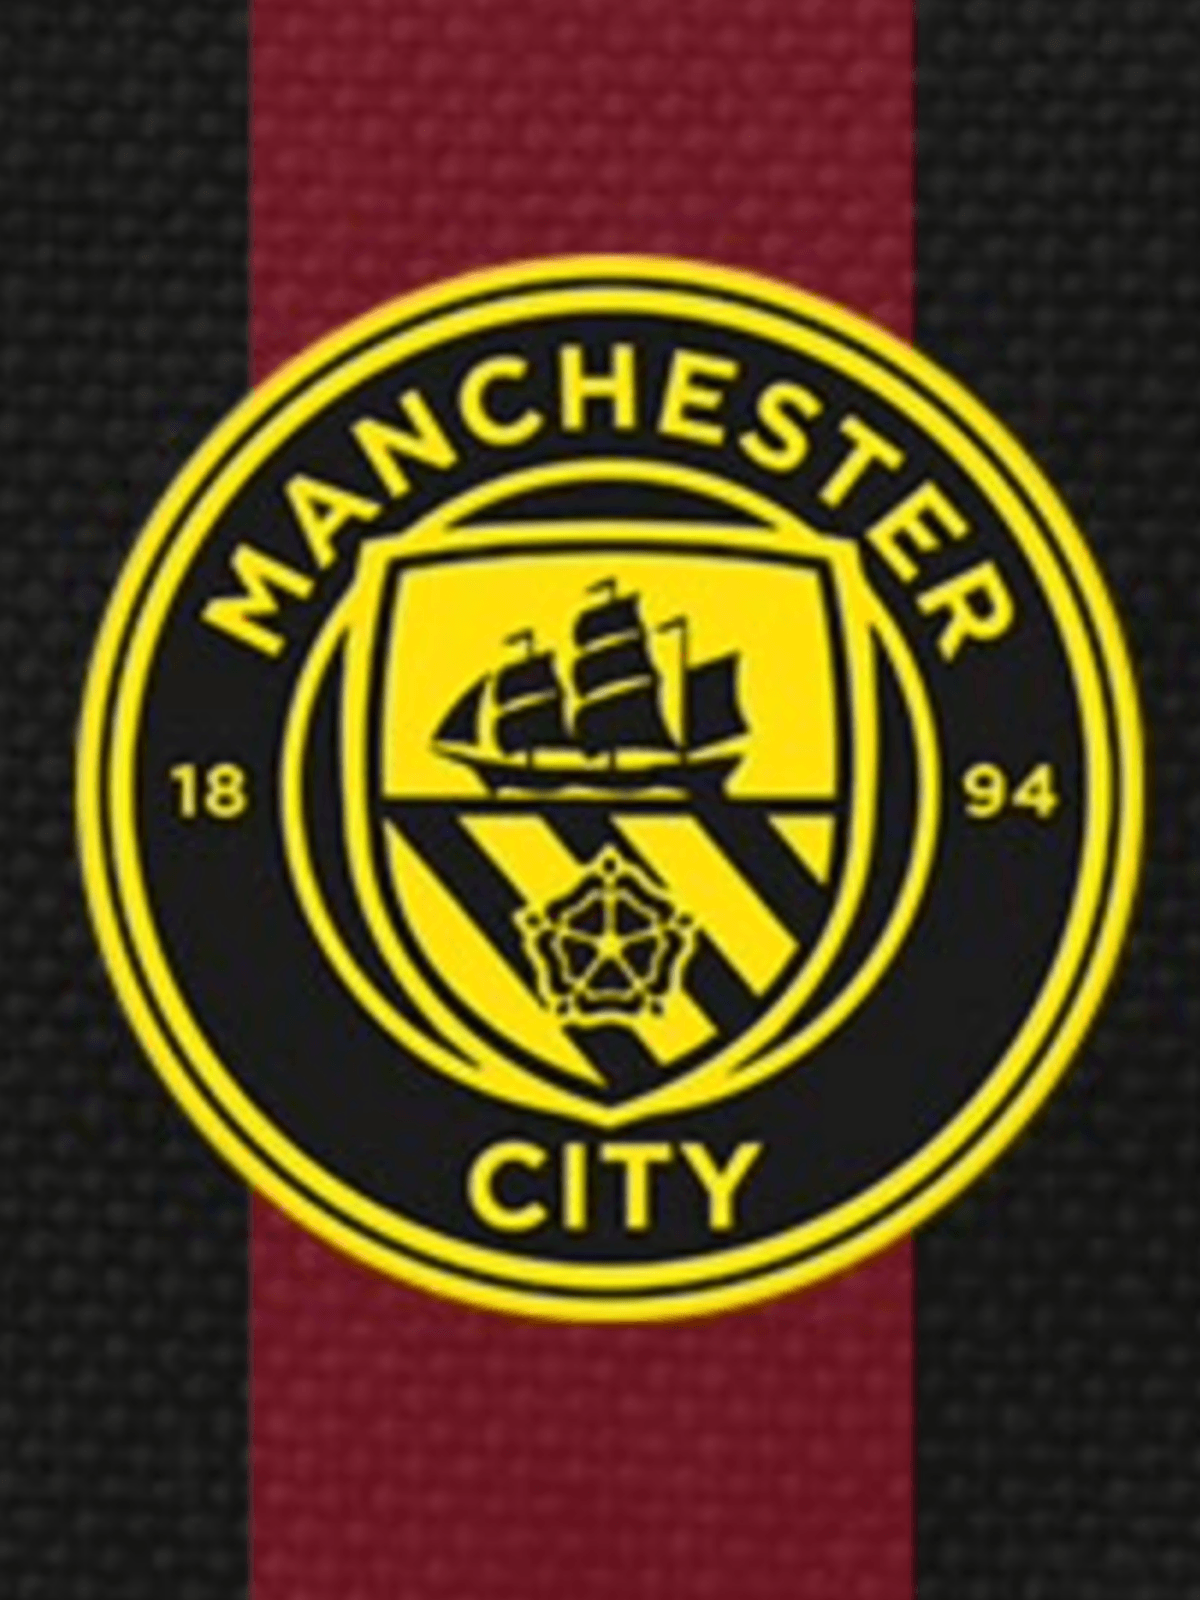 Yellow City Logo - New away kit revealed. Bluemoon MCFC. The leading